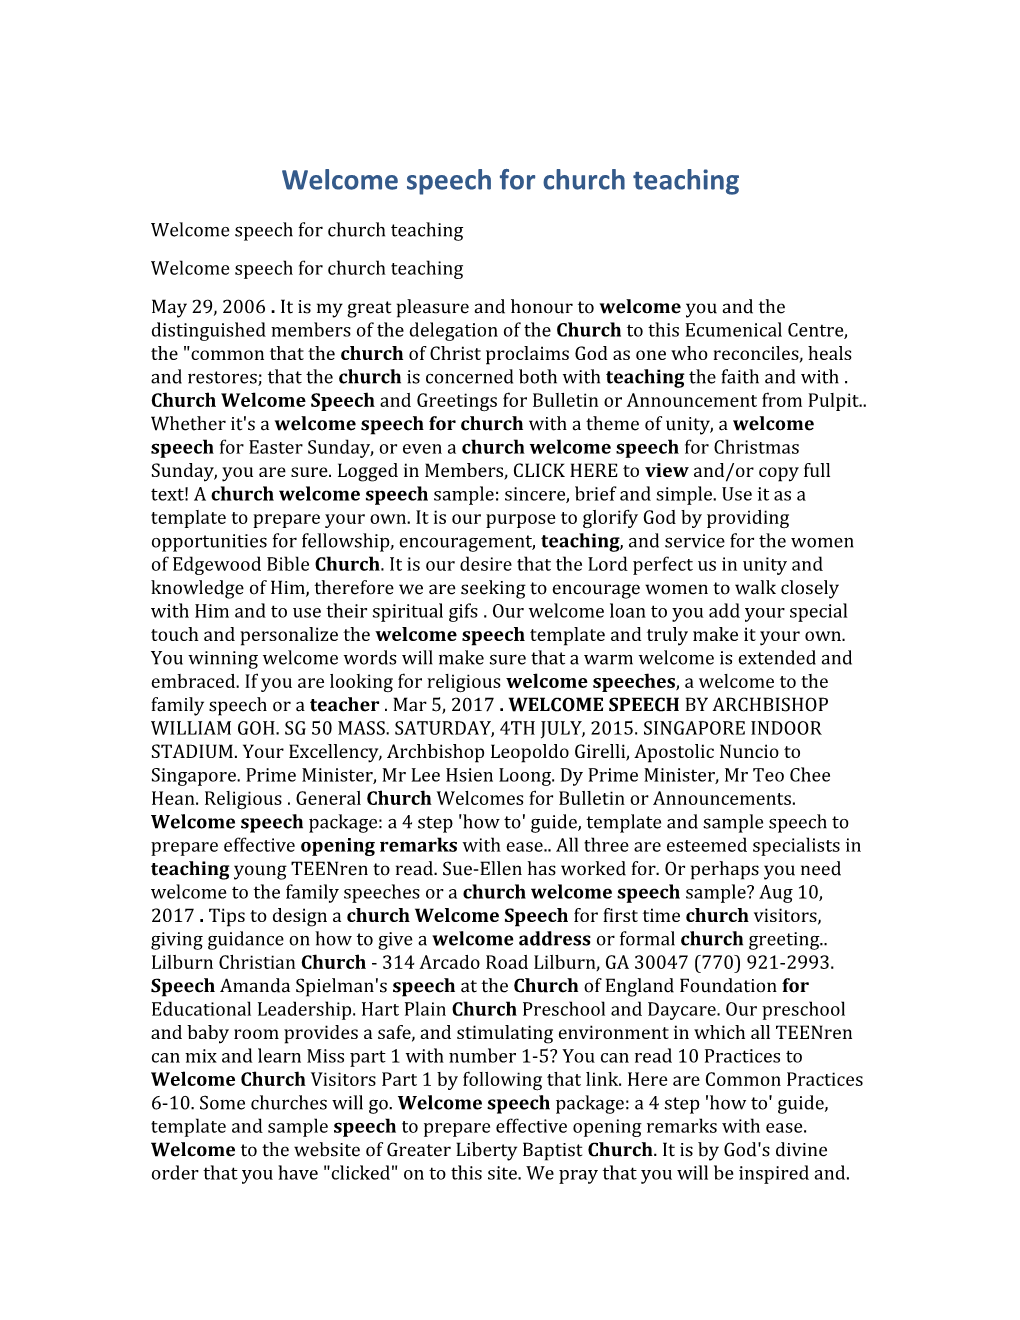 Welcome Speech for Church Teaching